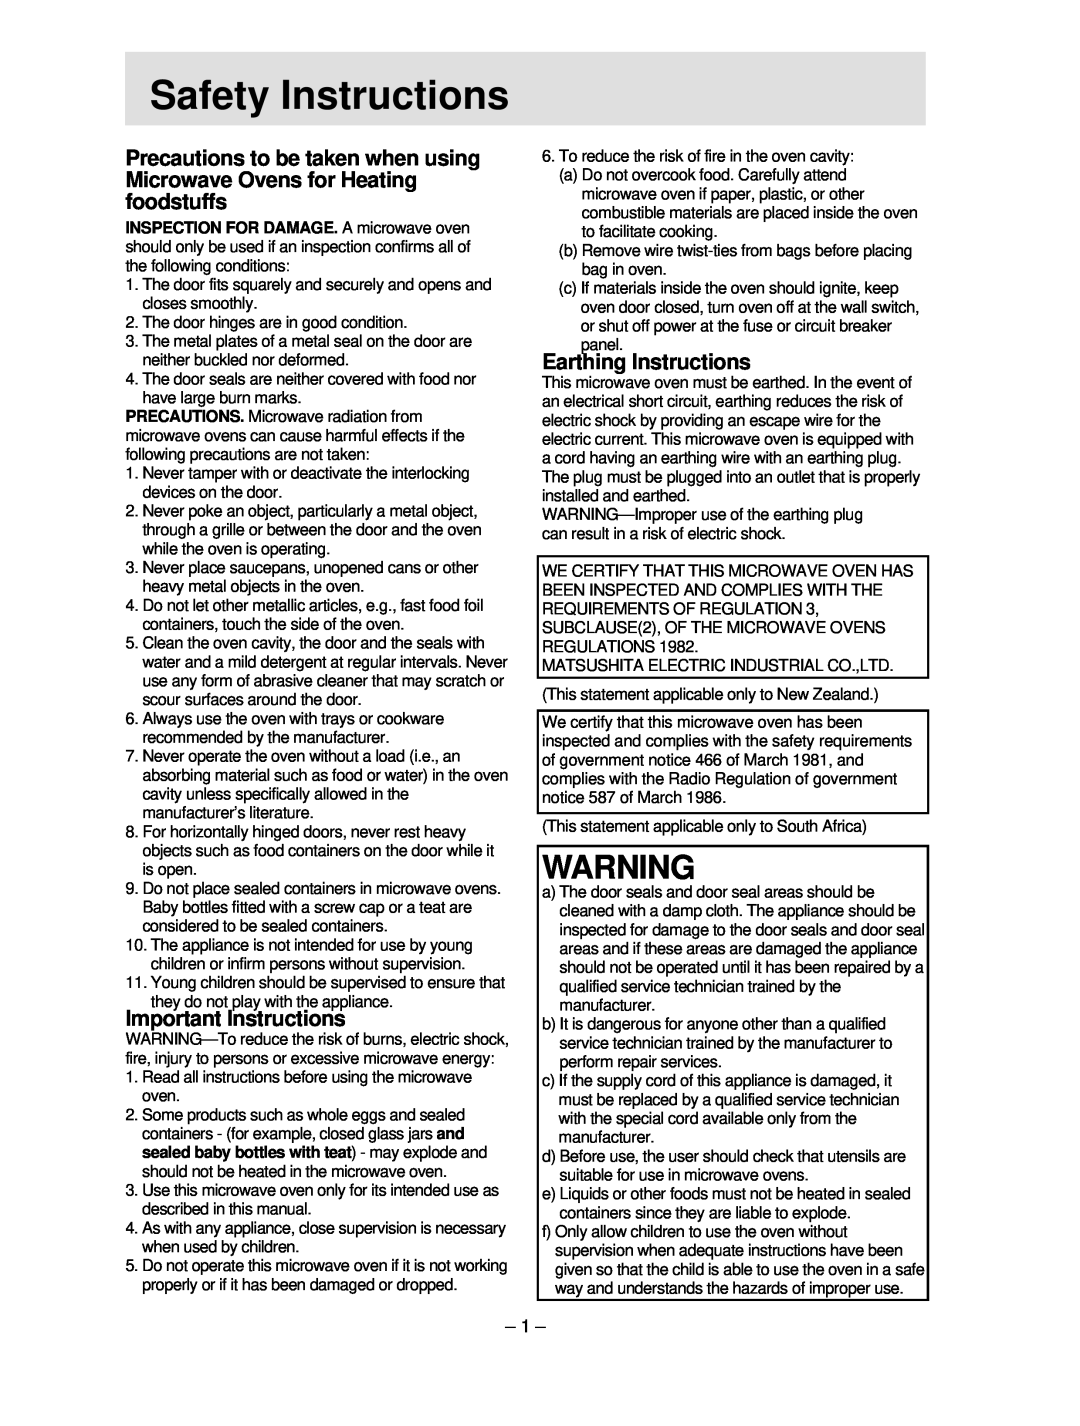 Panasonic NN-S754 manual Important Instructions, Earthing Instructions, hSafetyh Instructions 